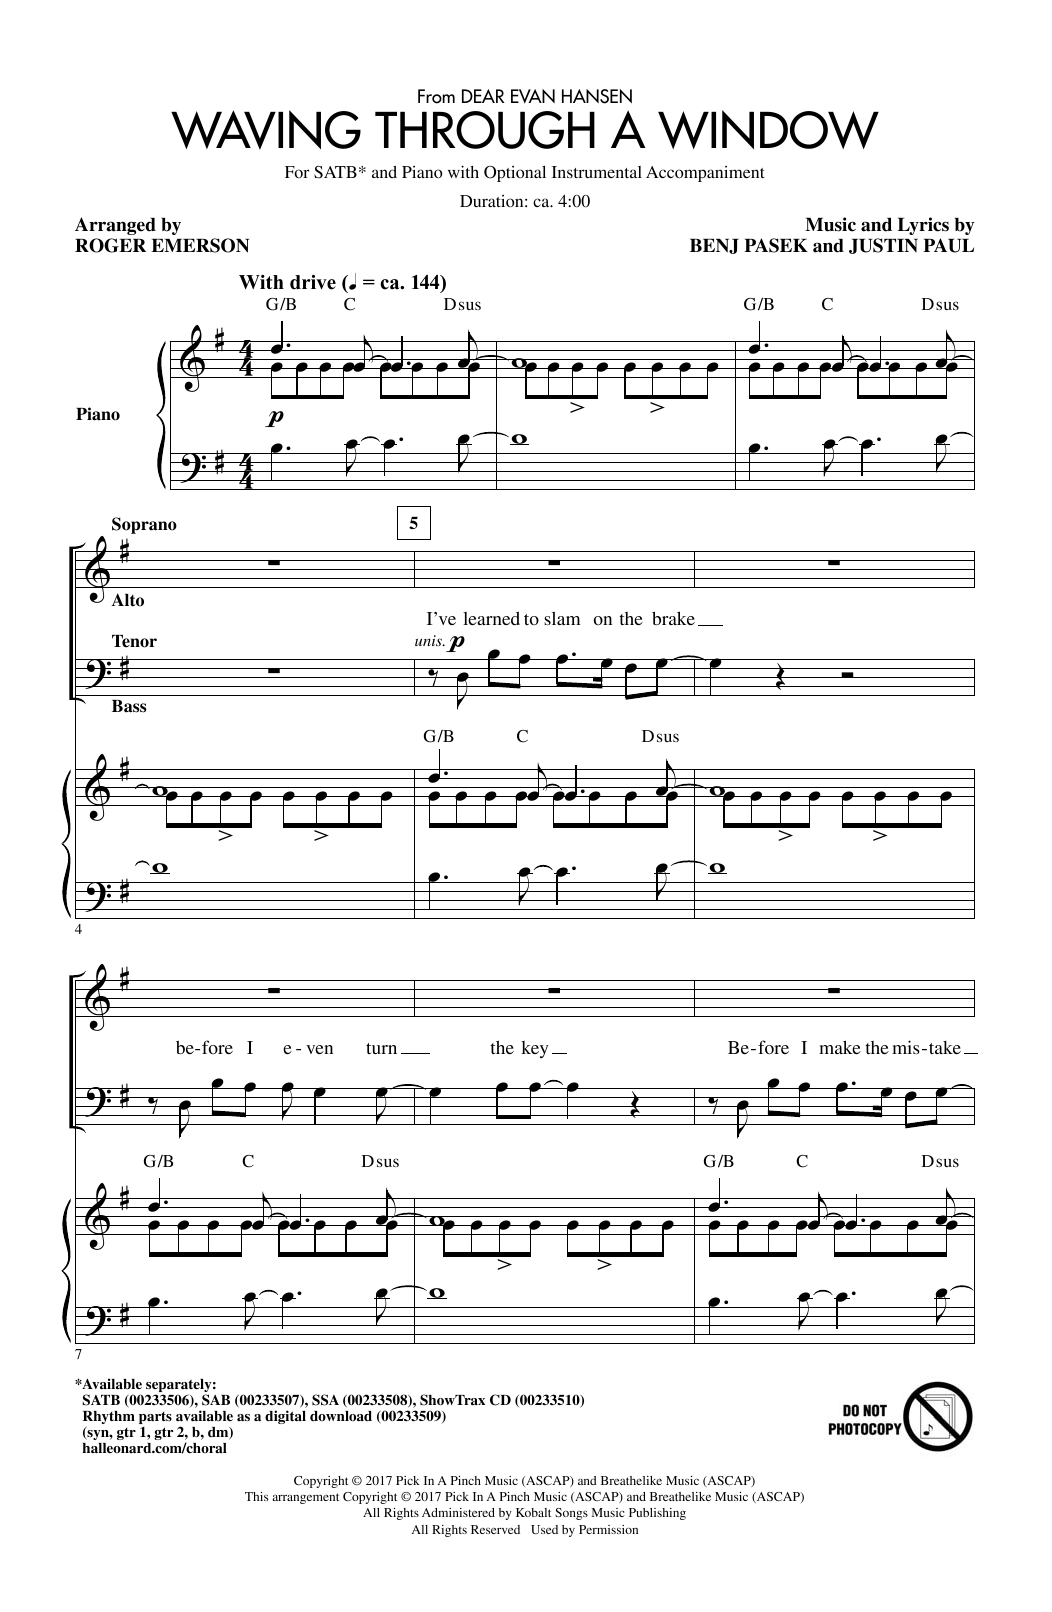 Roger Emerson Waving Through A Window Sheet Music Notes & Chords for 2-Part Choir - Download or Print PDF